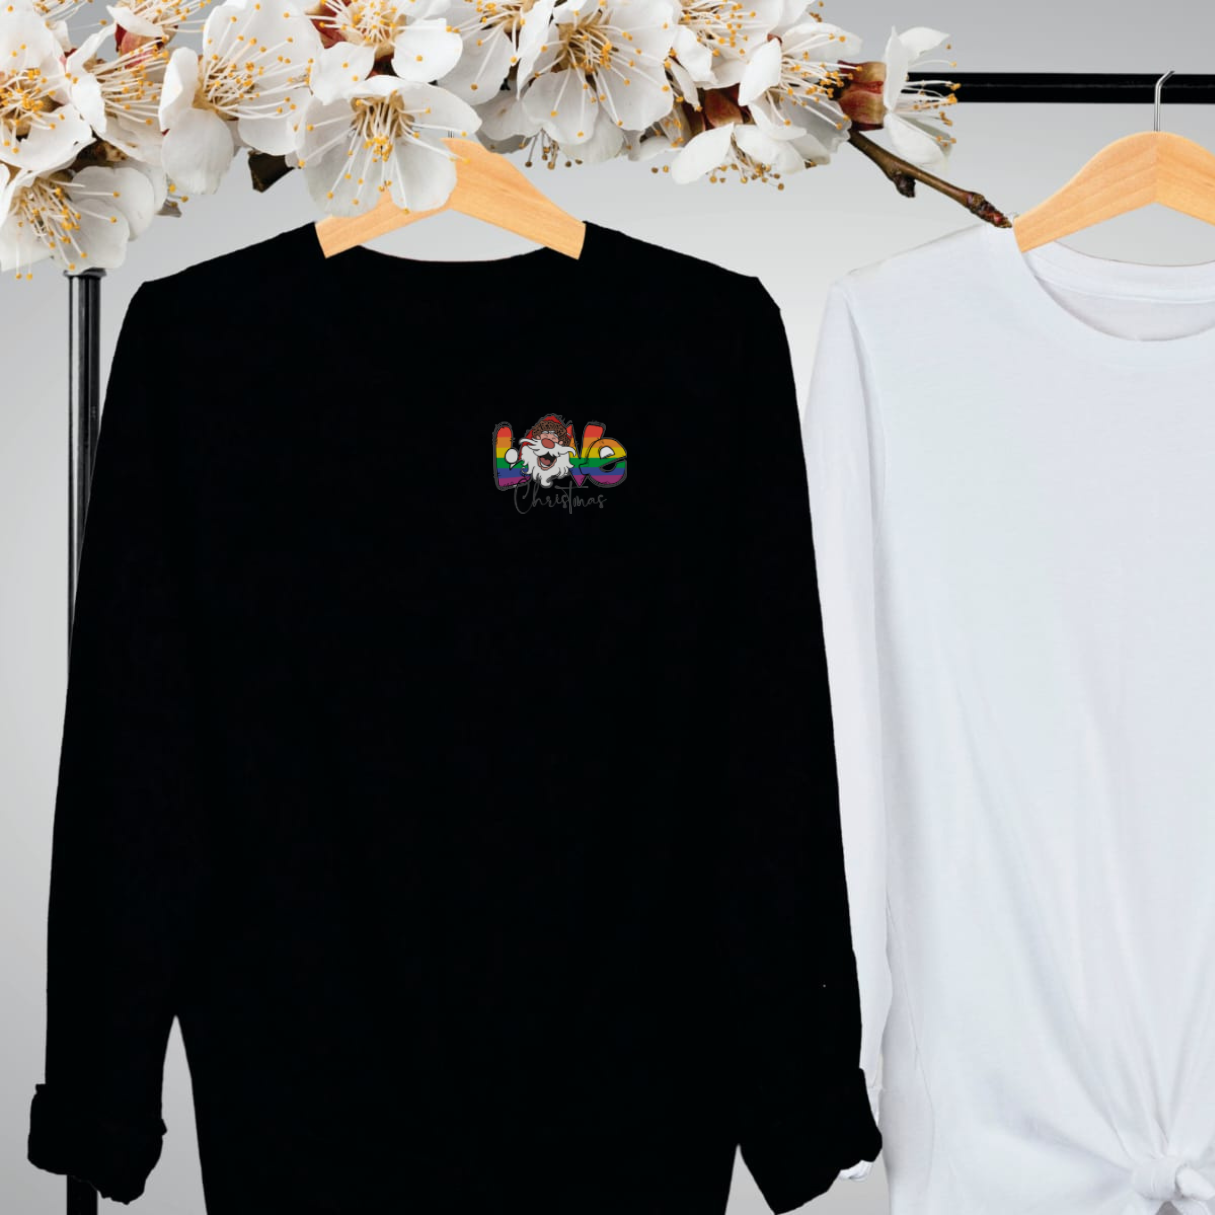 "Pride love Christmas text design centered on black long sleeve shirt."